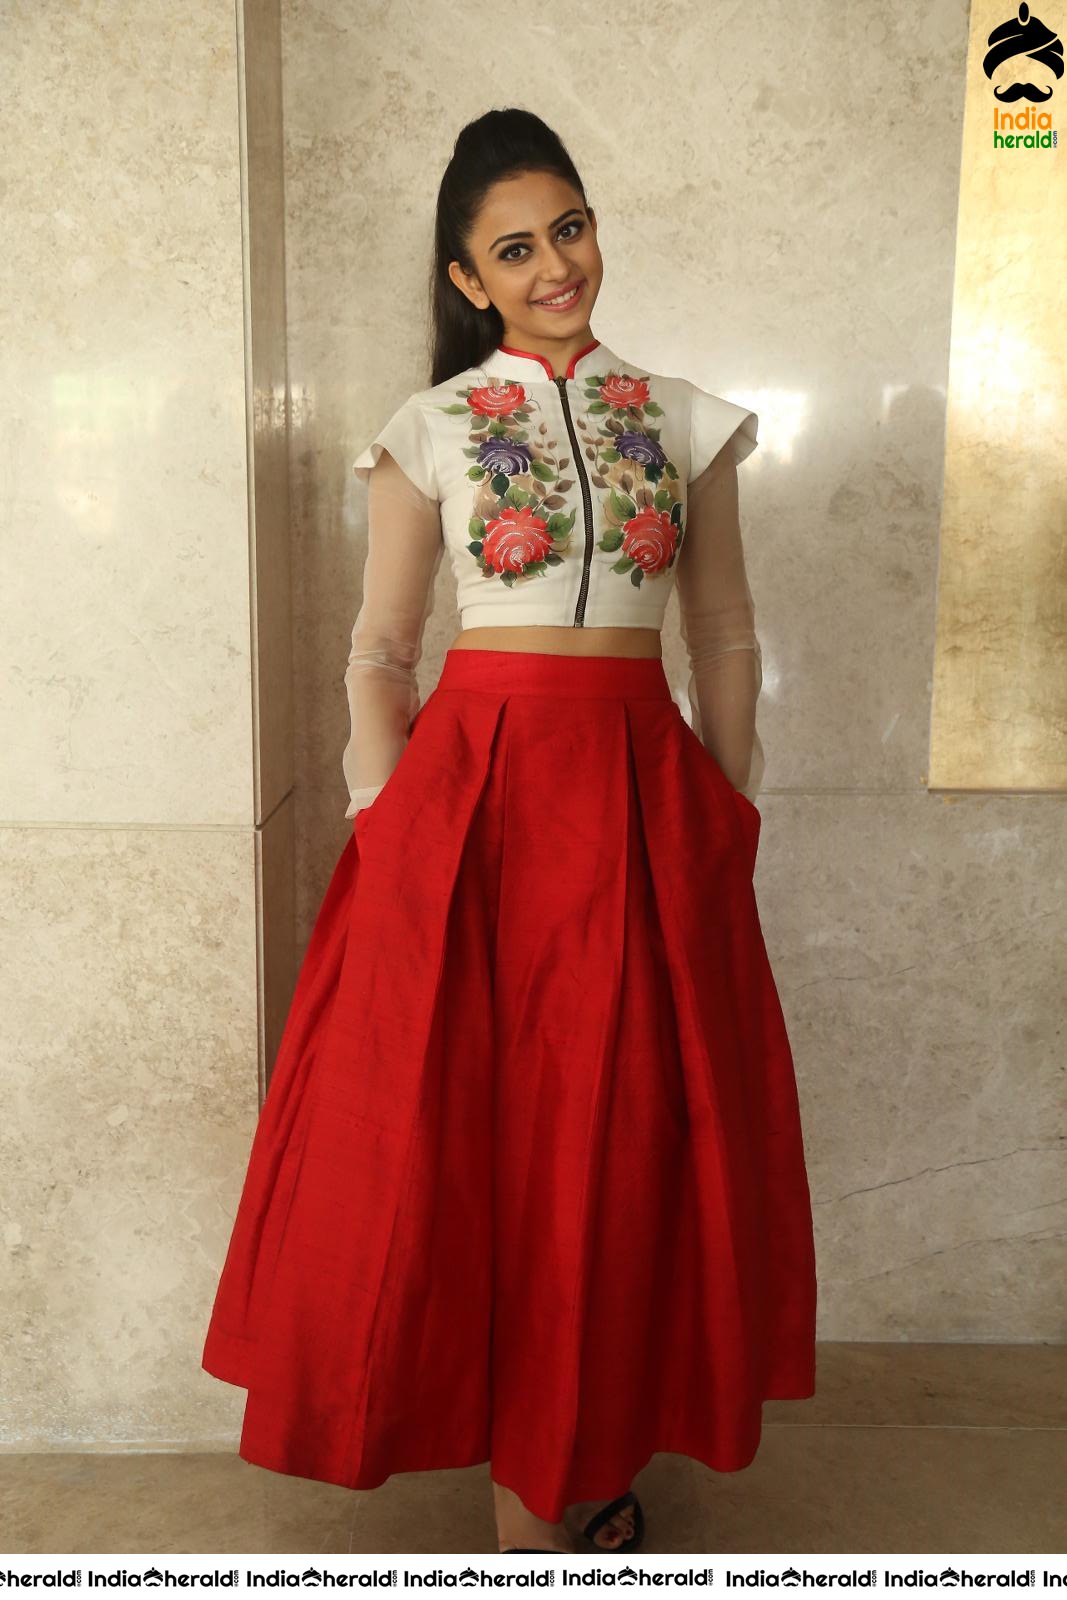 Rakul Preet seen like an Angel in Floral Top and Red Long Skirt Set 1